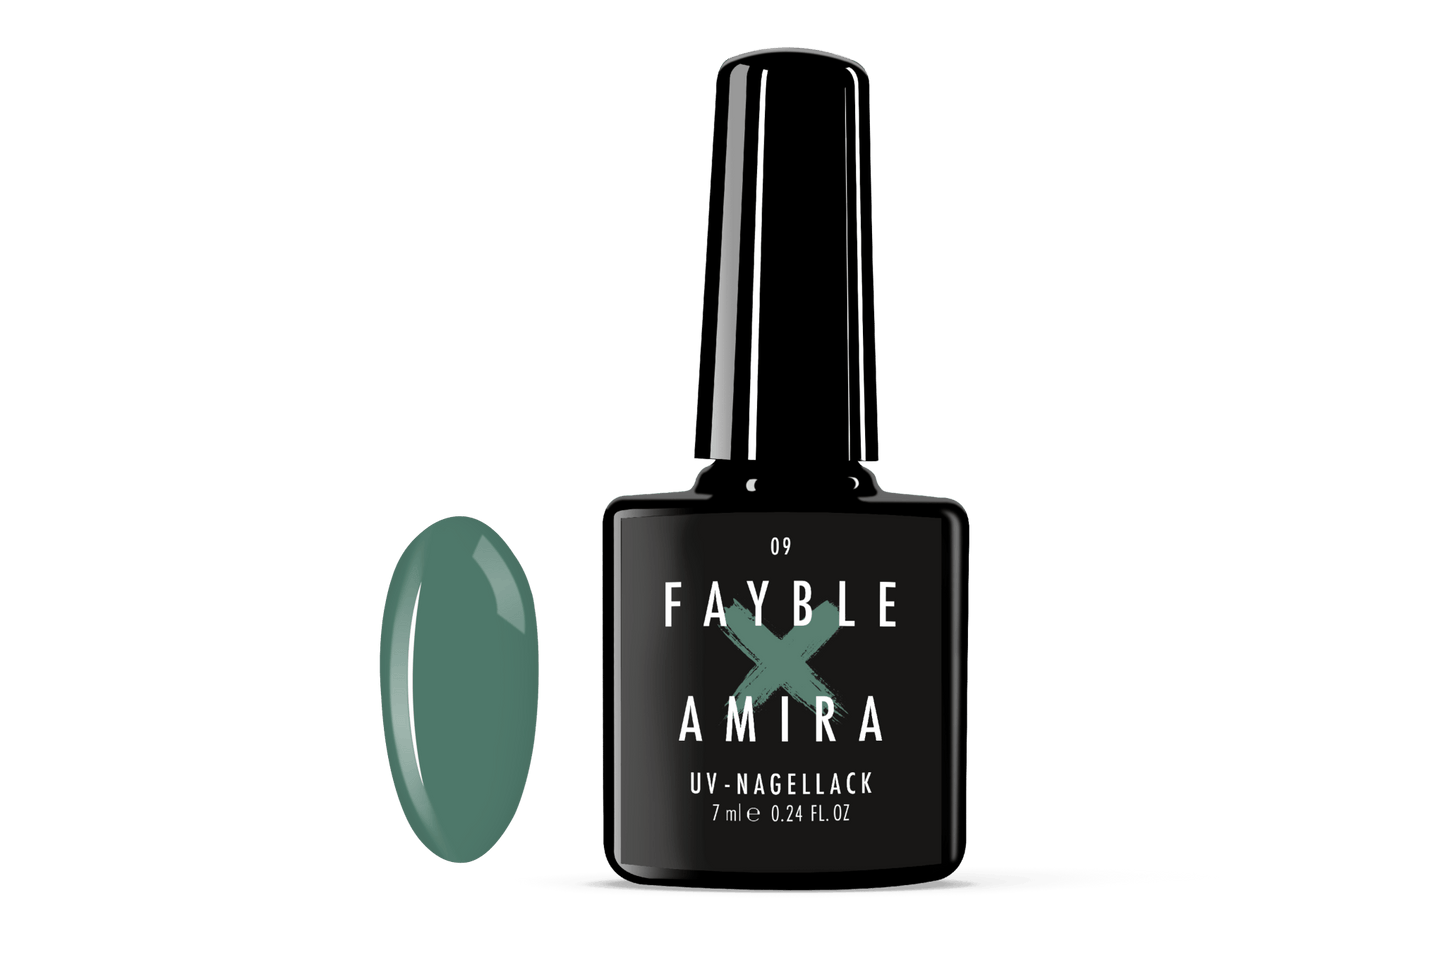 FAYBLE × AMIRA | UV-Nagellack 09 - FAYBLE